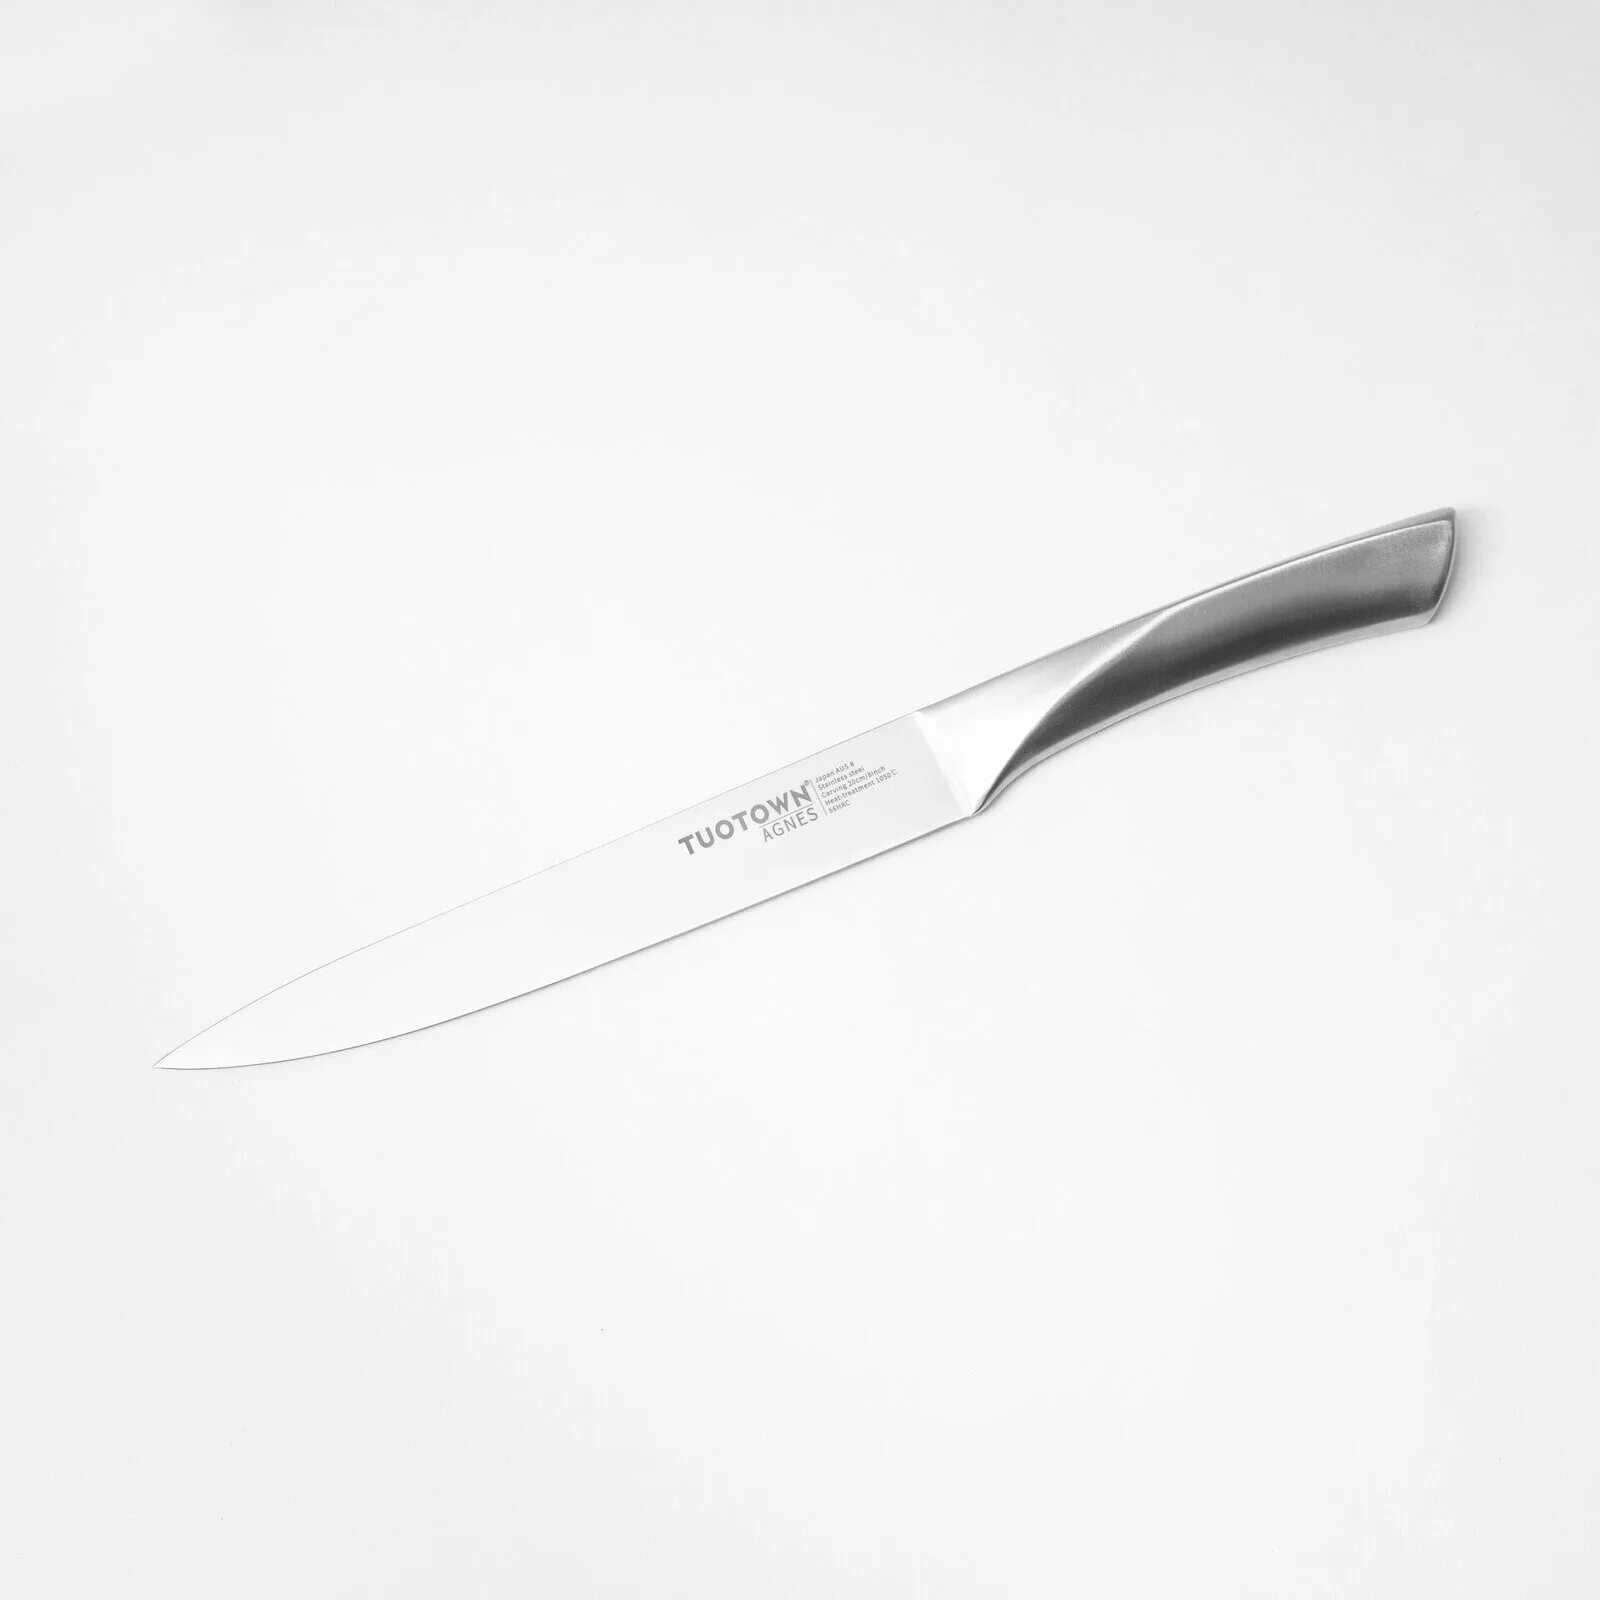 Кухонные ножи tuotown. TUOTOWN ножи кухонные. Нож Edelstahl Rost frei s 1665 набор. Набор ножей для кухни Edelstahl Rost frei inox.